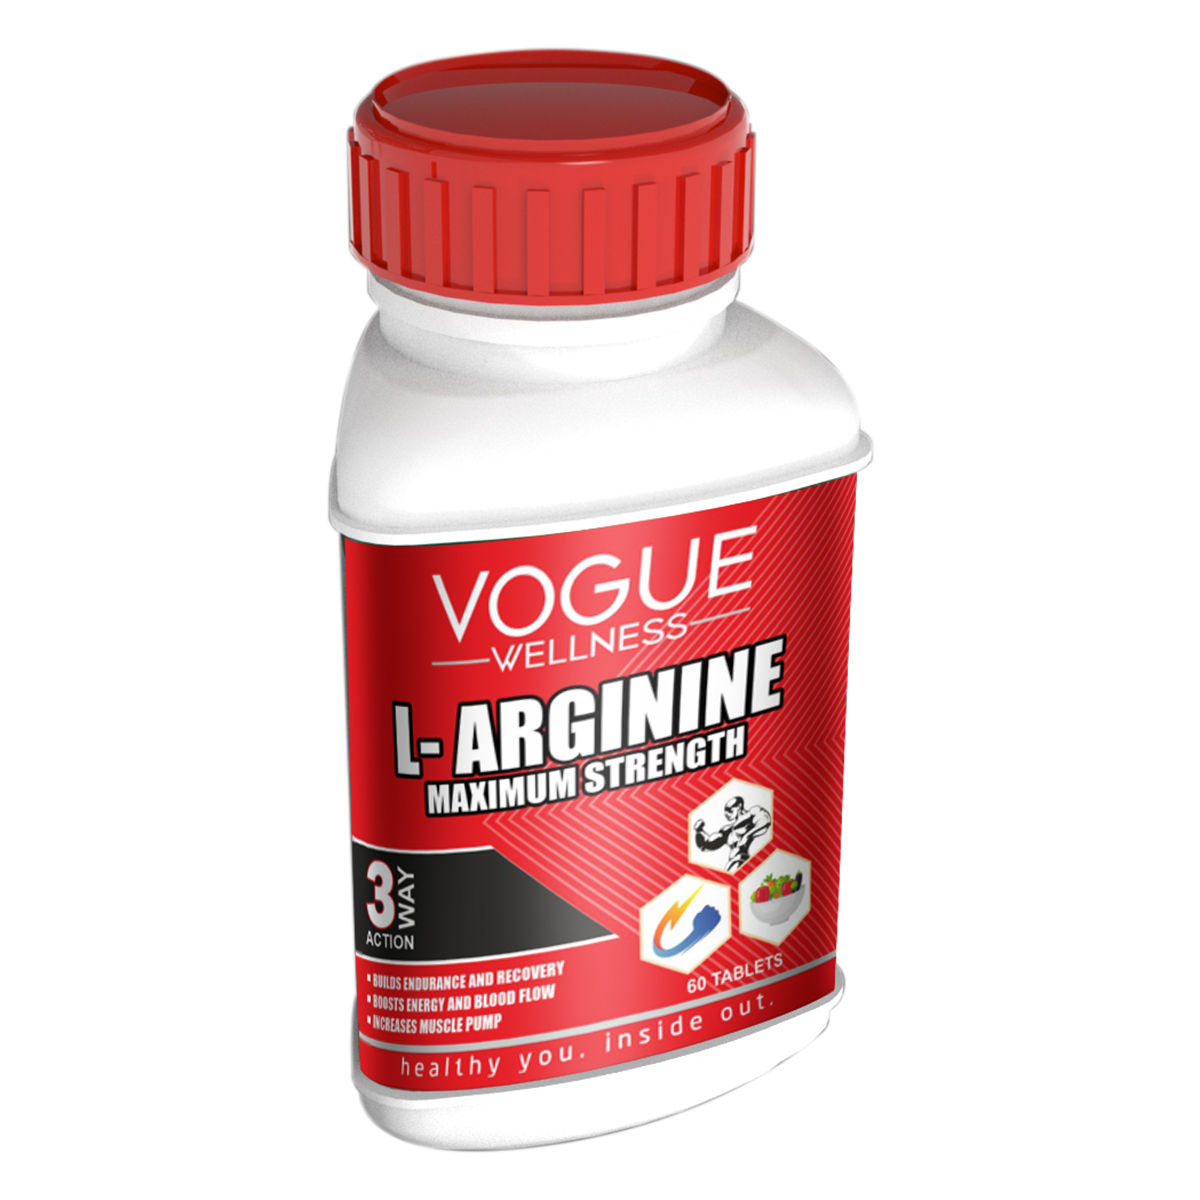 Buy Vogue Wellness L-Arginine Maximum Strength, 60 Tablets Online